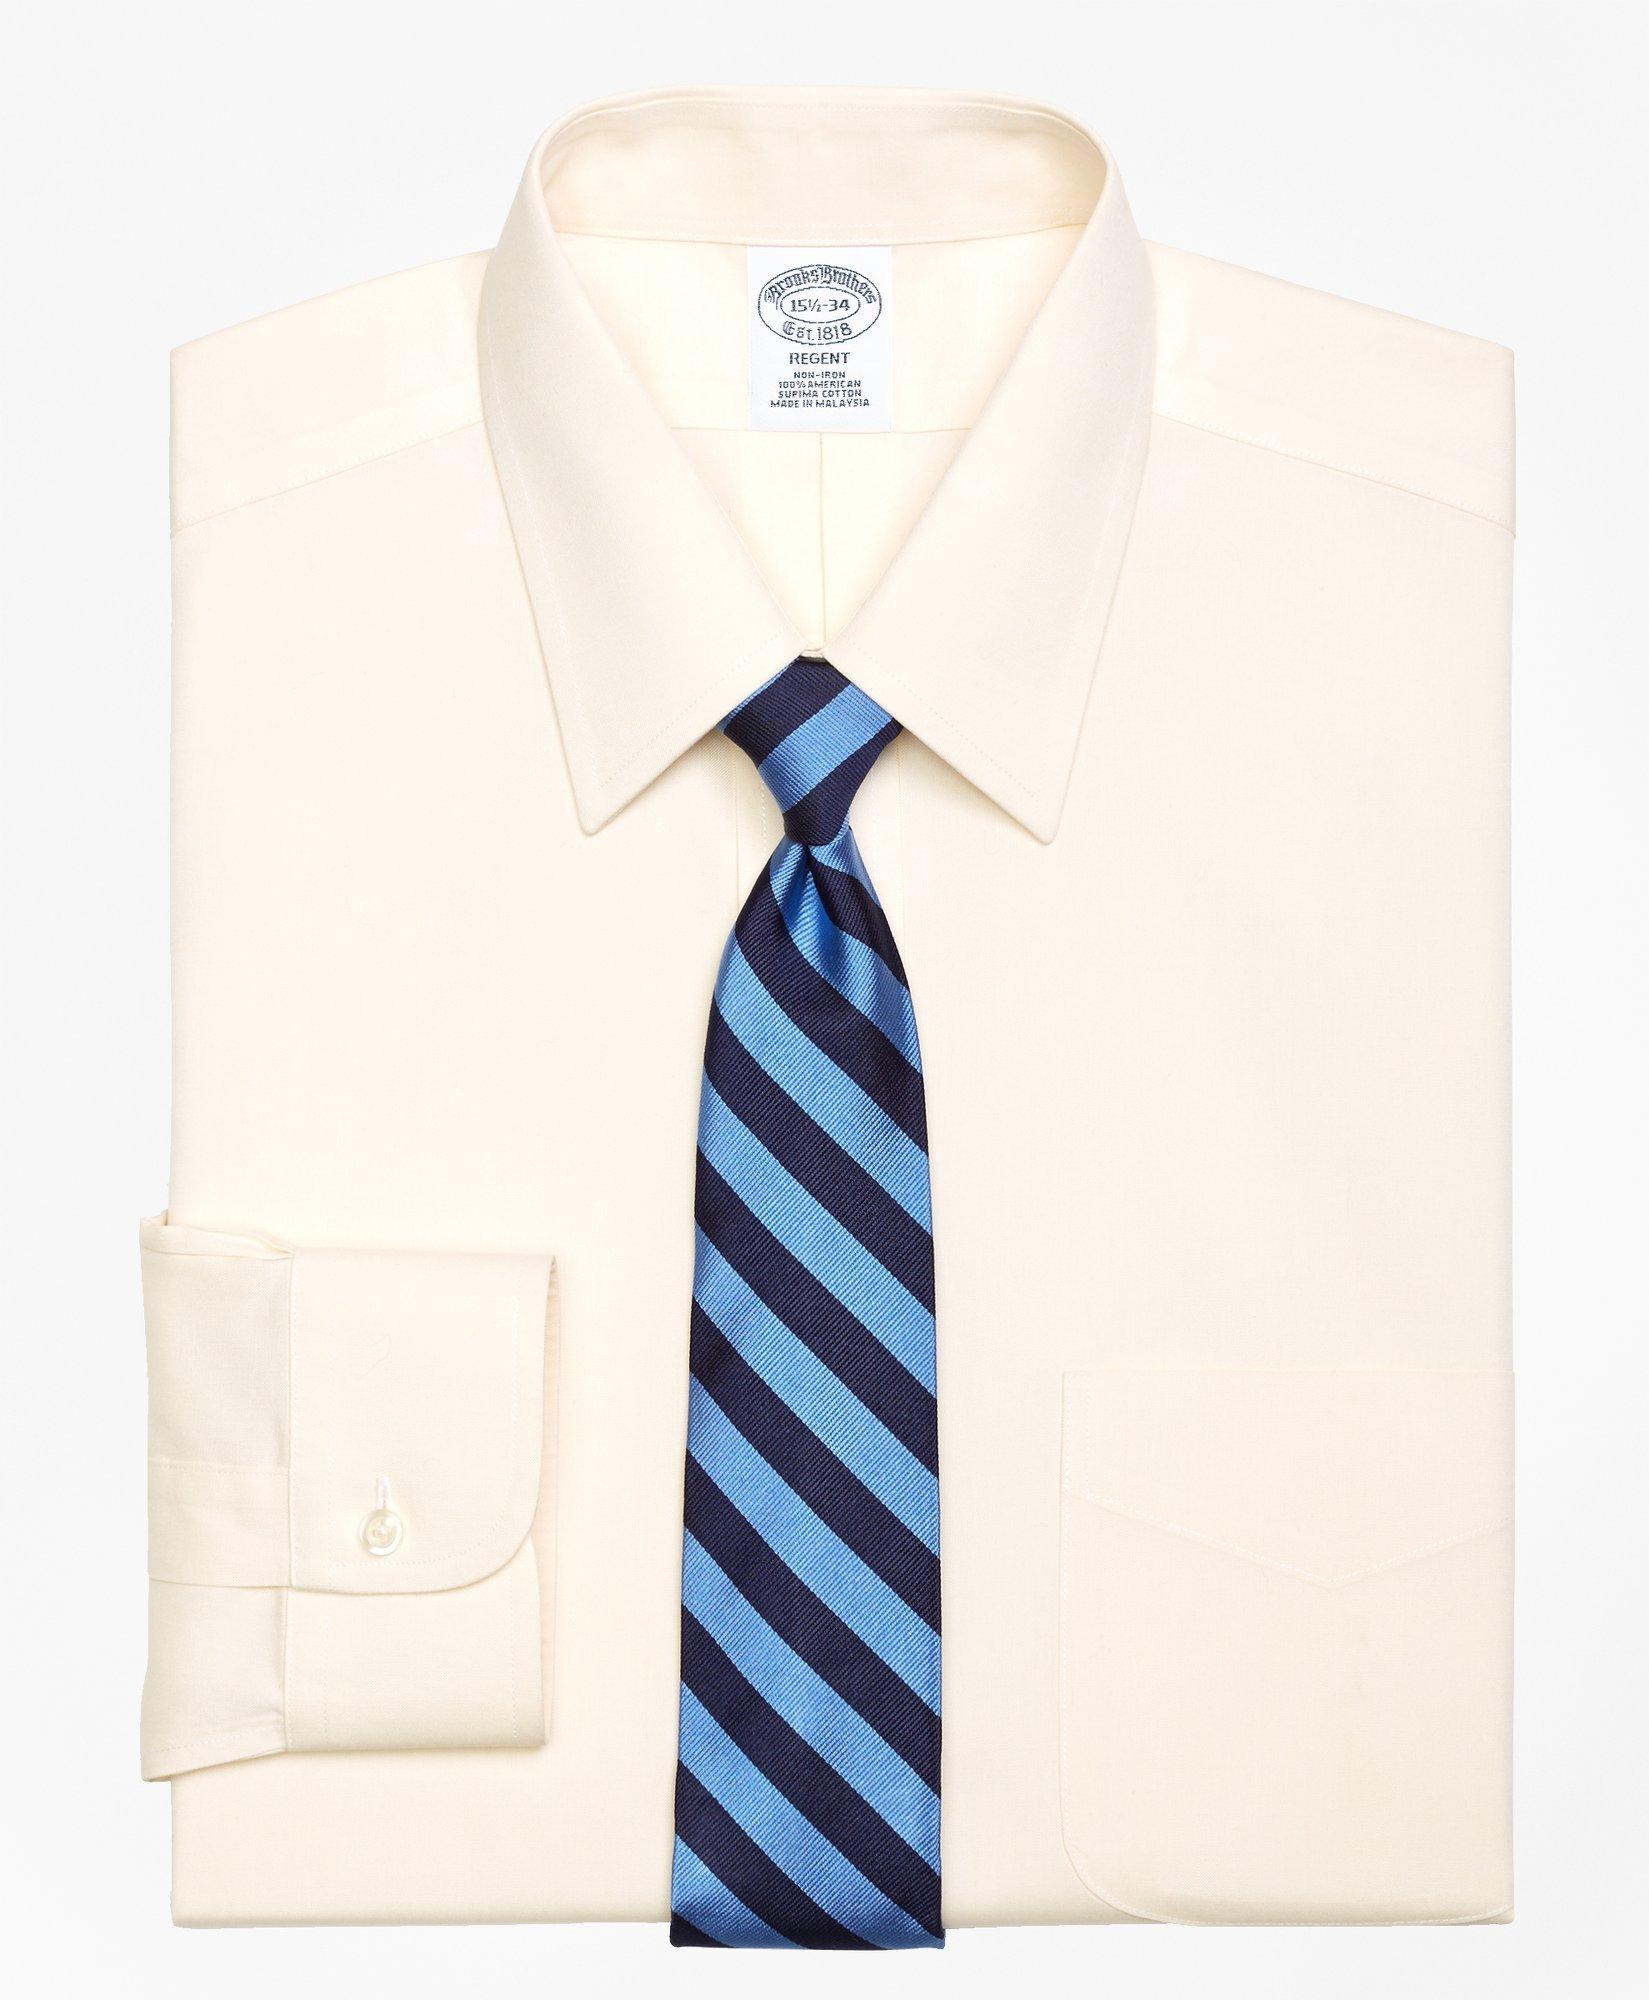 Men's Non-Iron Slim Fit BrooksCool Button-Down Collar Dress Shirt